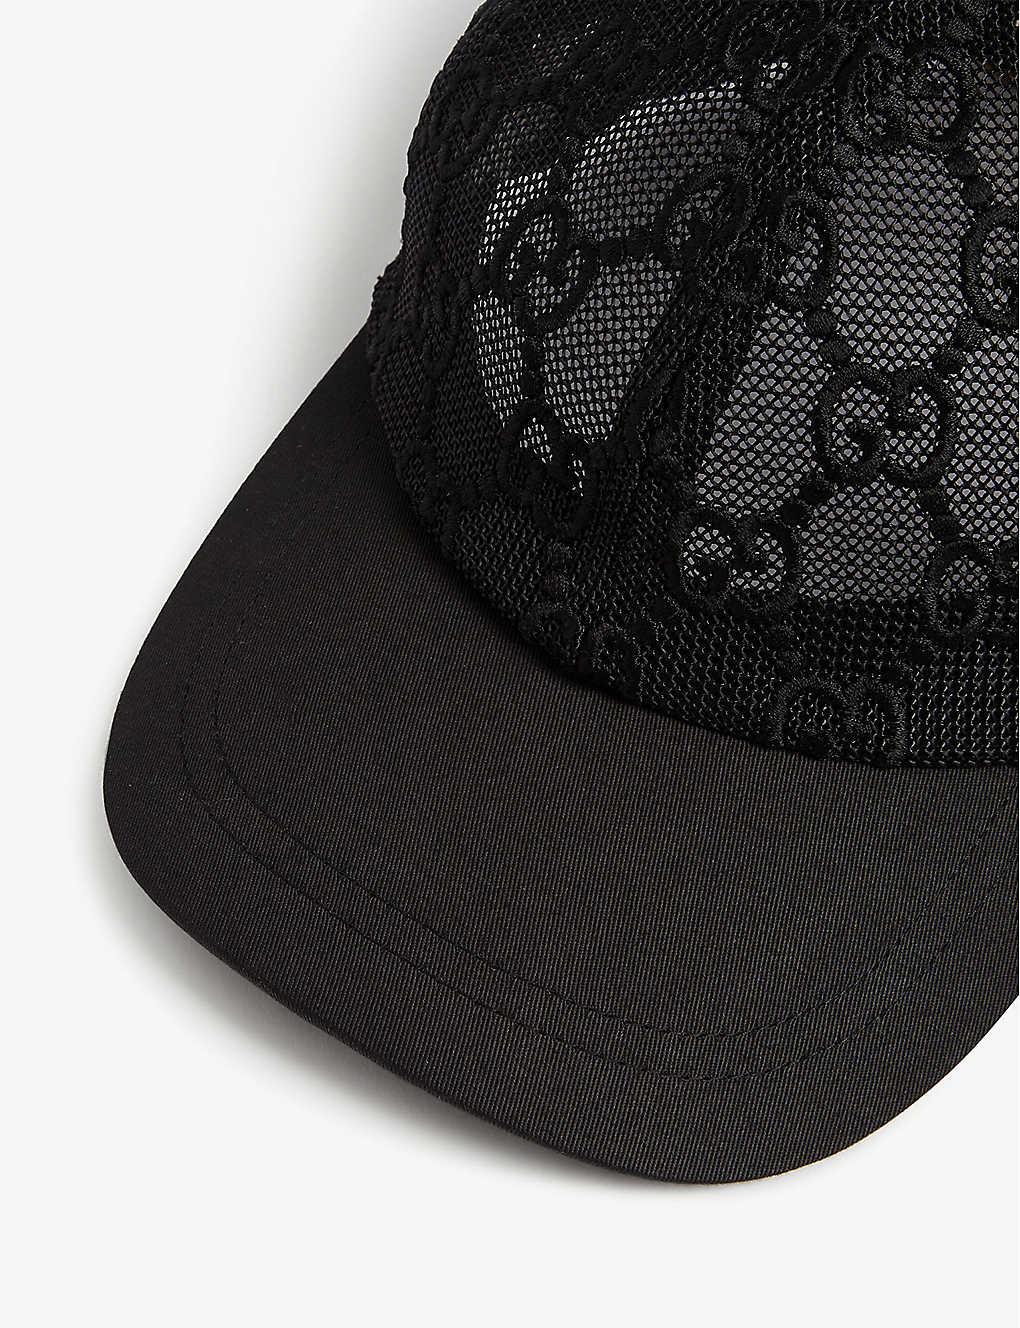 GUCCI GG COTTON BASEBALL CAP - BLACK – SGN CLOTHING